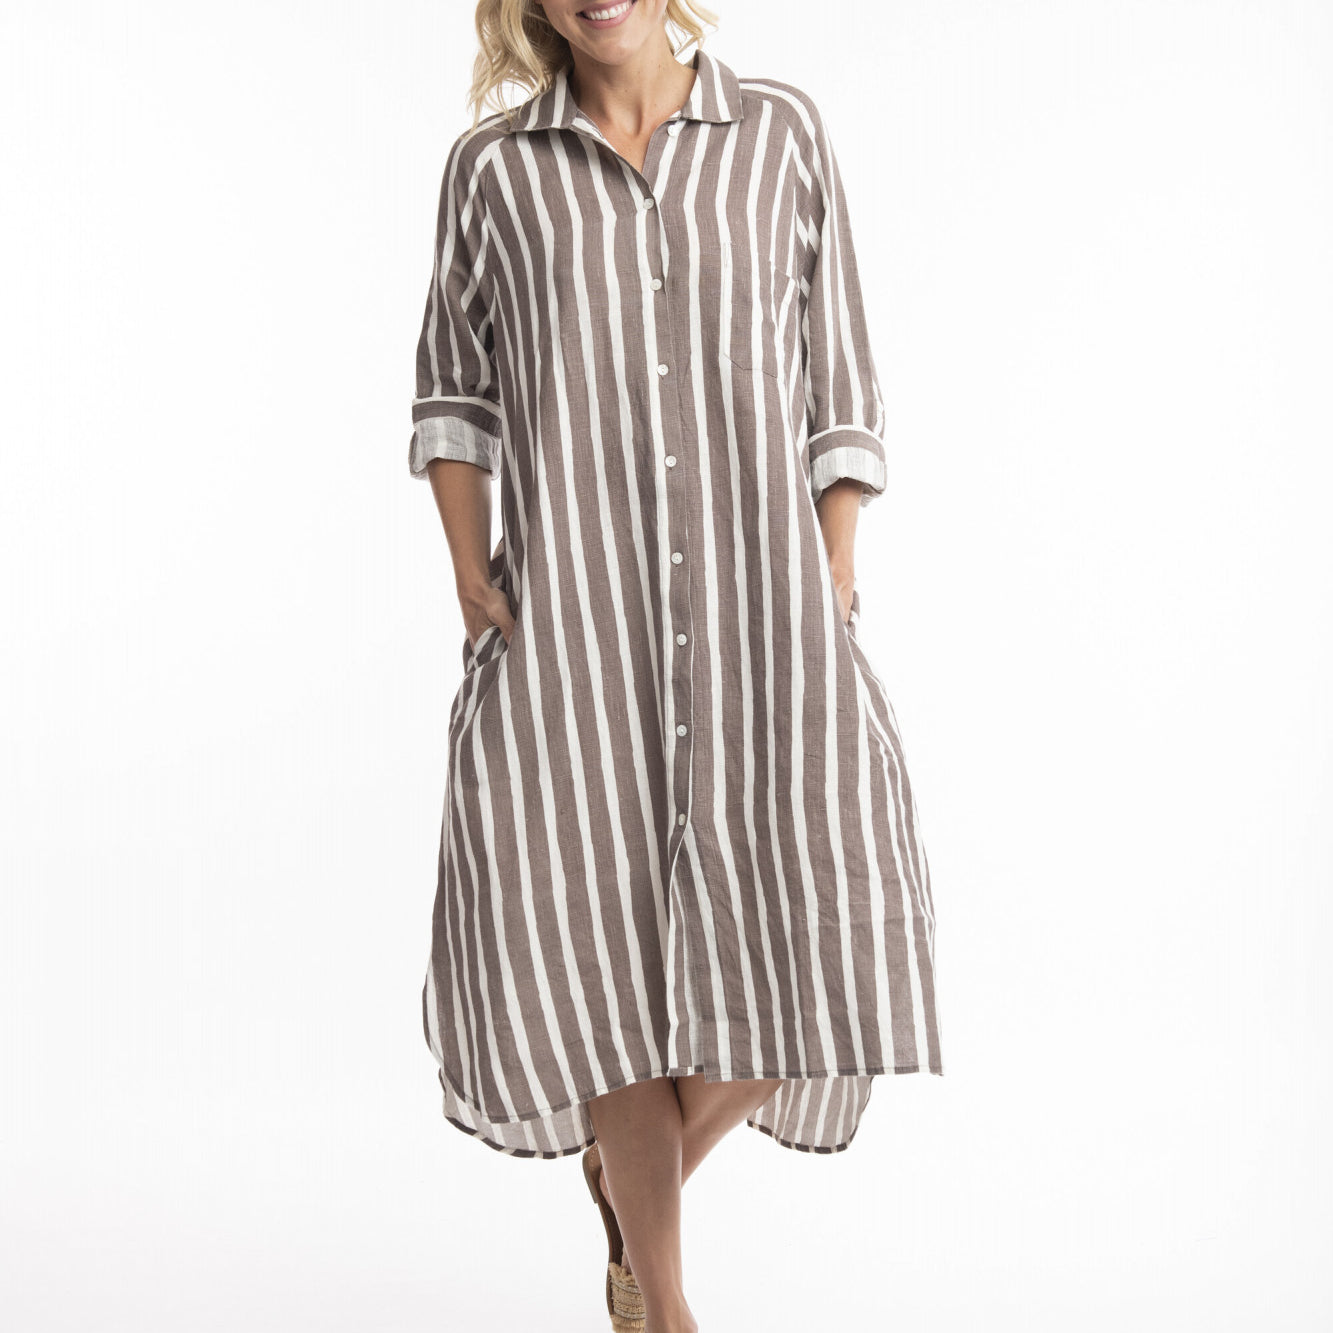 Orientique Australia 71460 Stripe Linen Shirt Dress